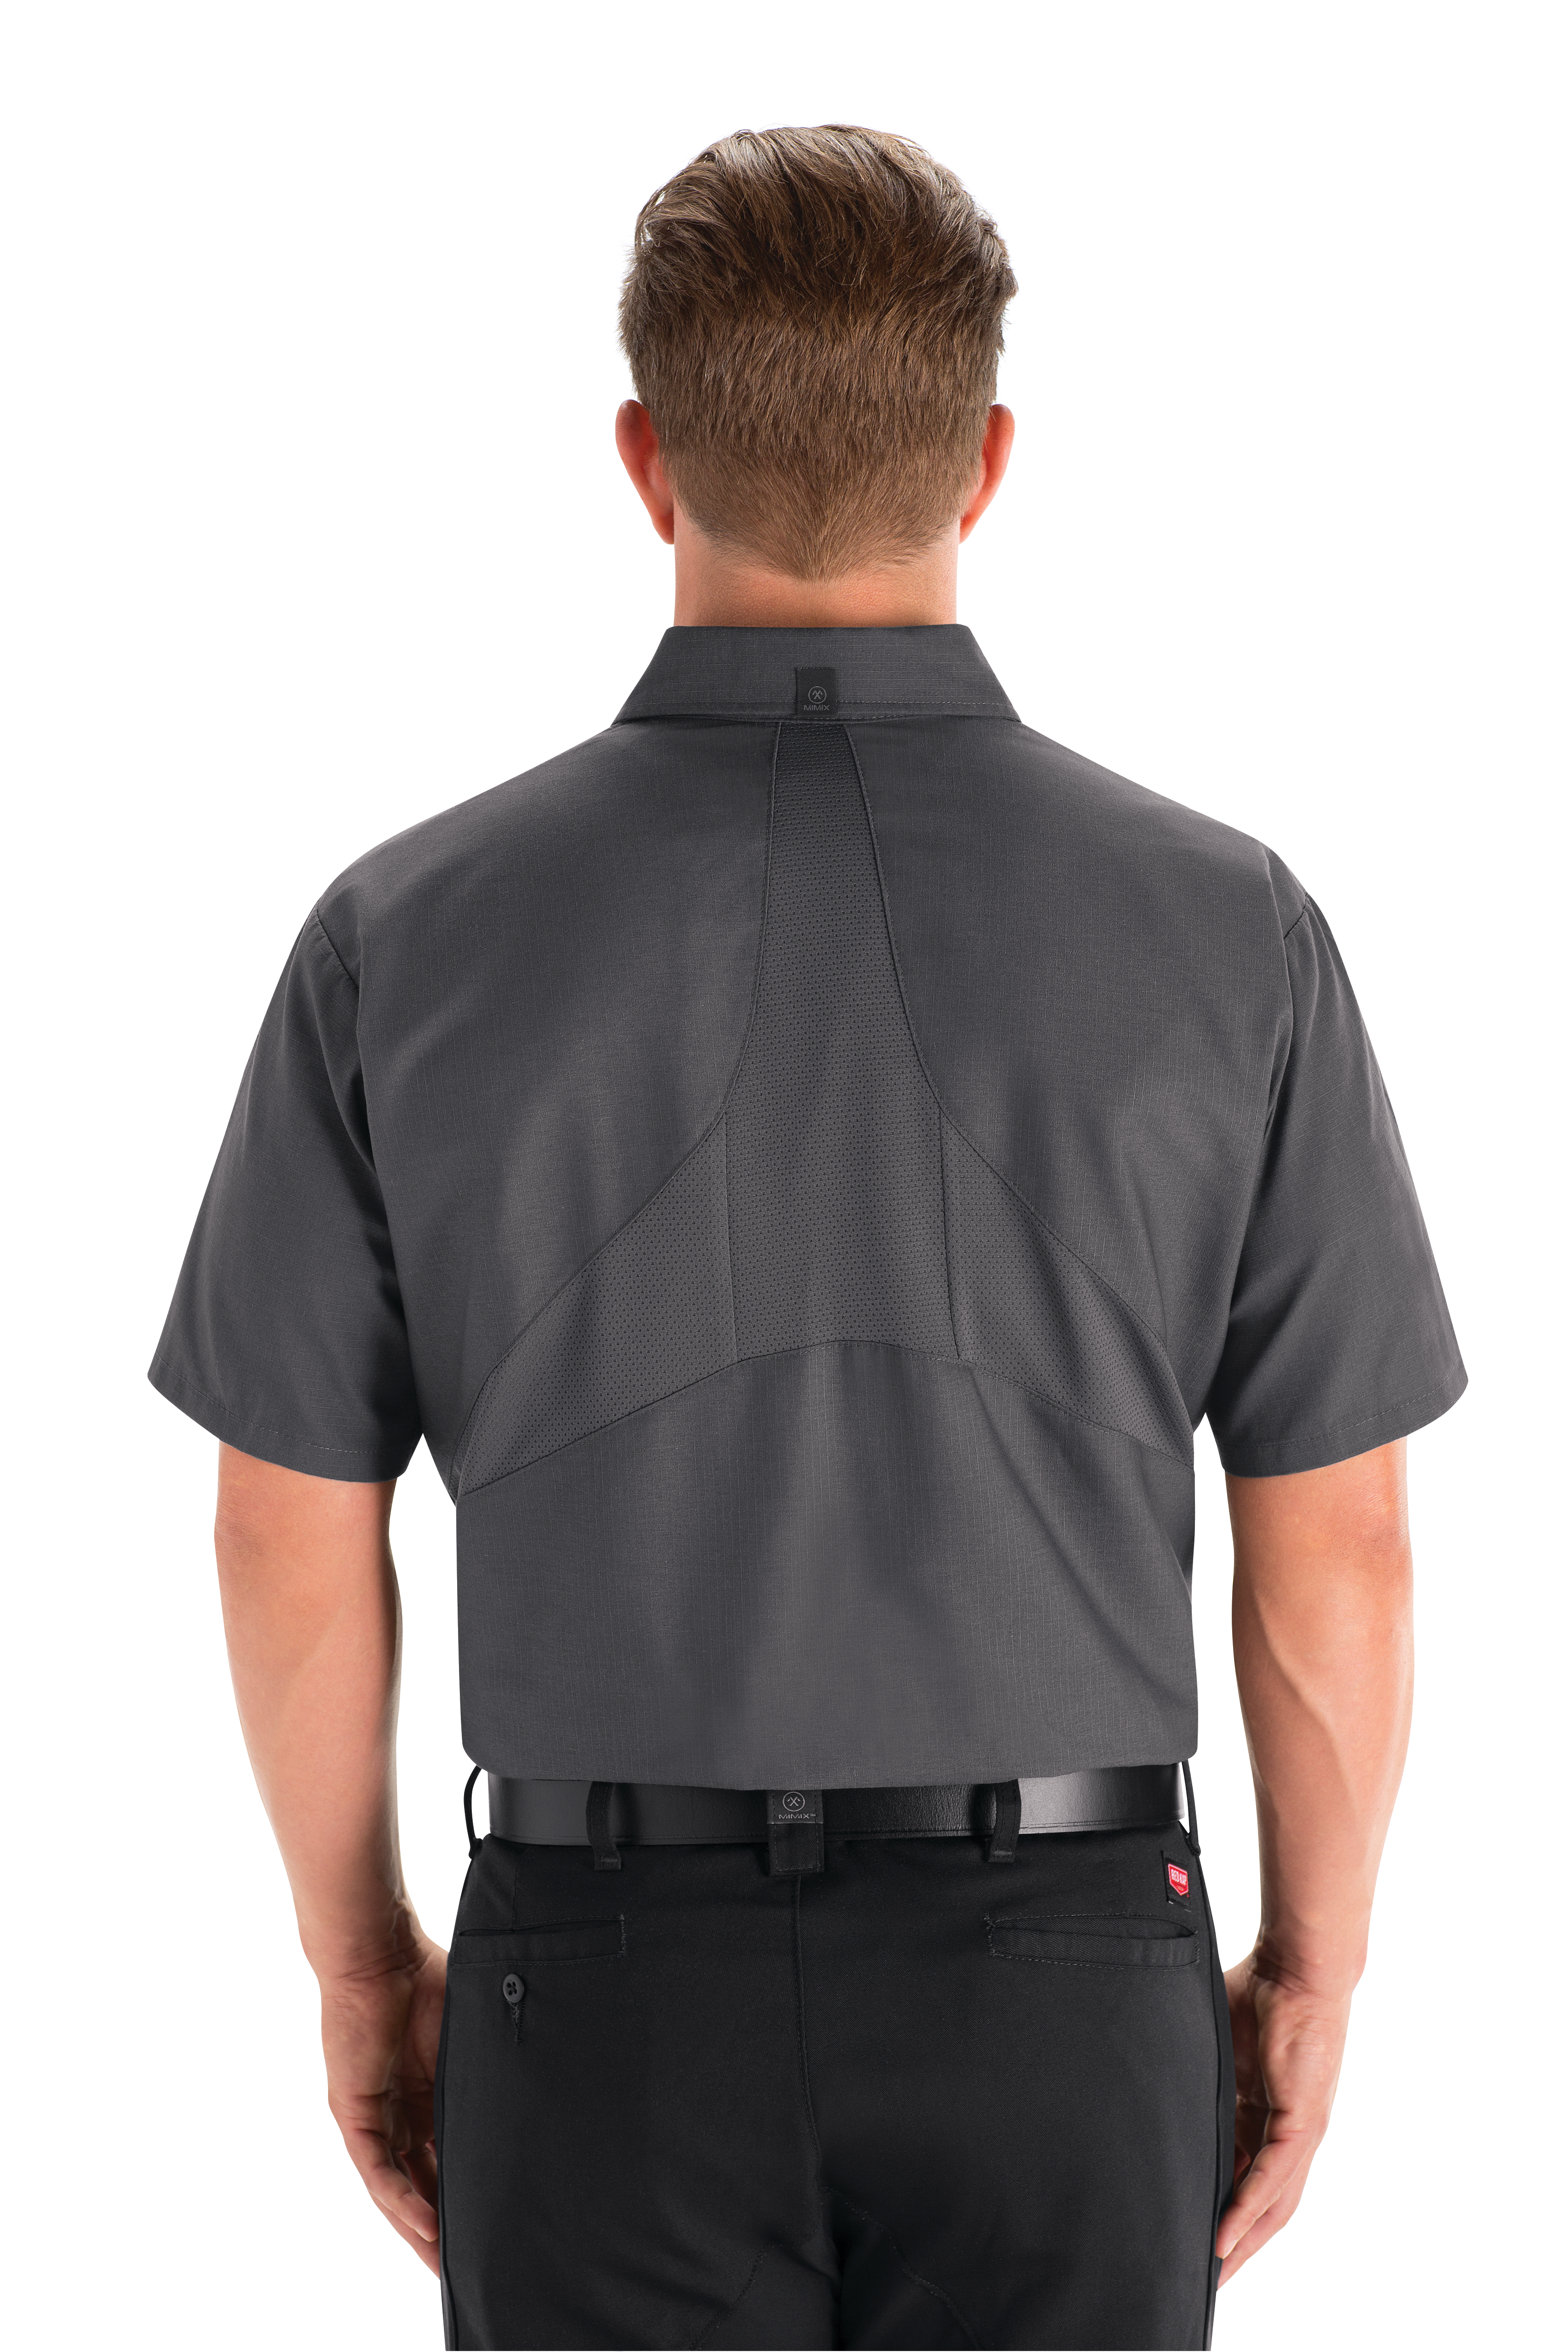 Red Kap Mens Short Sleeve Work Shirt with Mimix 